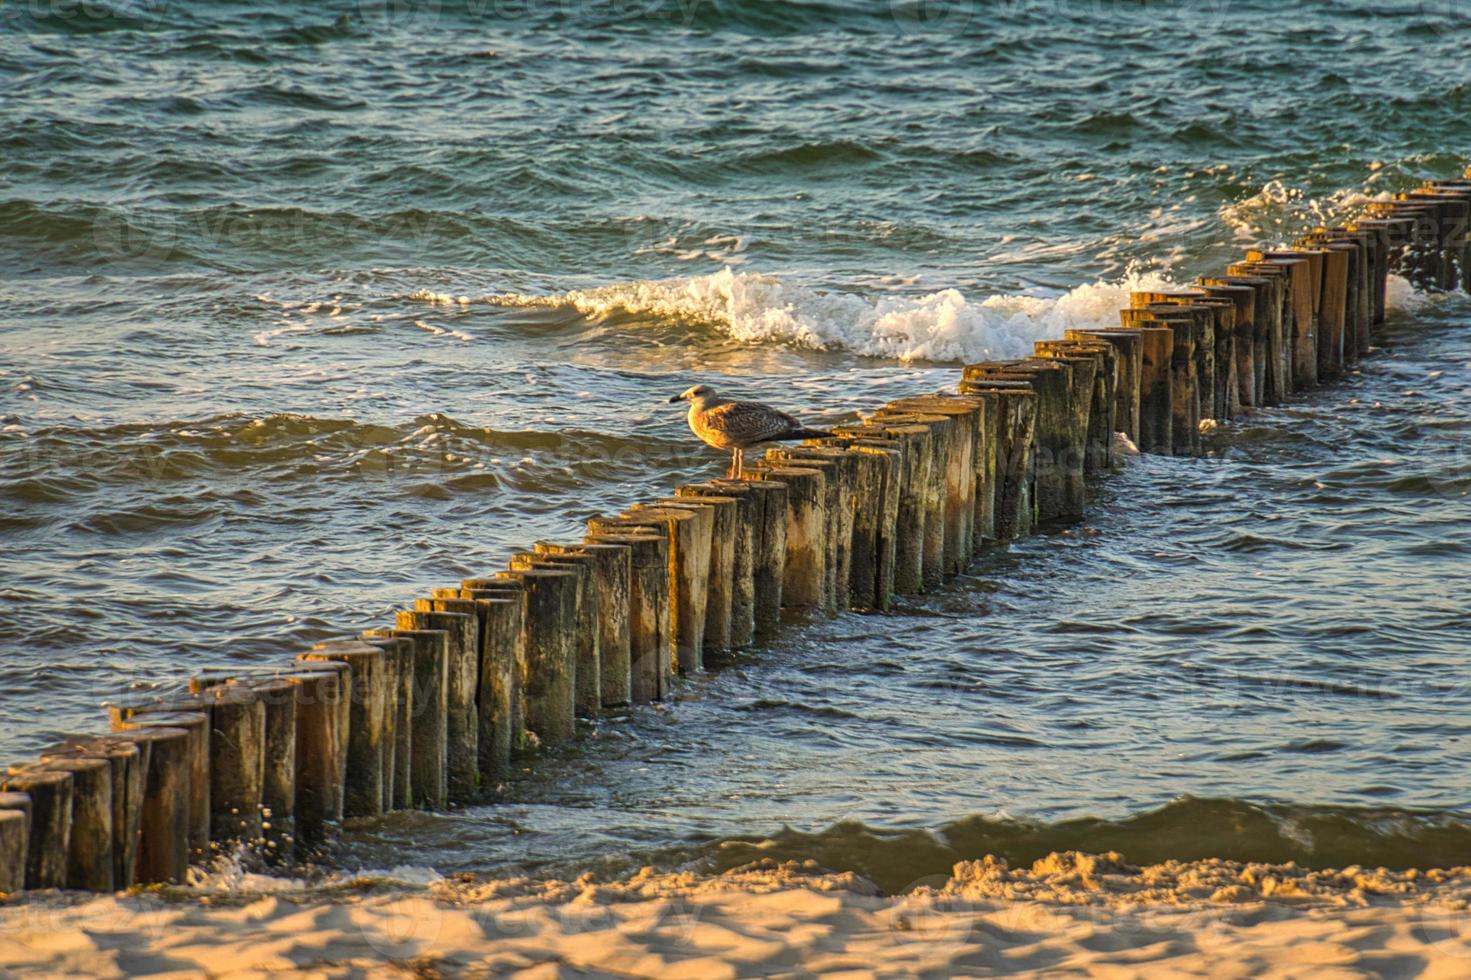 groynes on the beach of the Baltic Sea in Zingst. Waves break on the wood photo